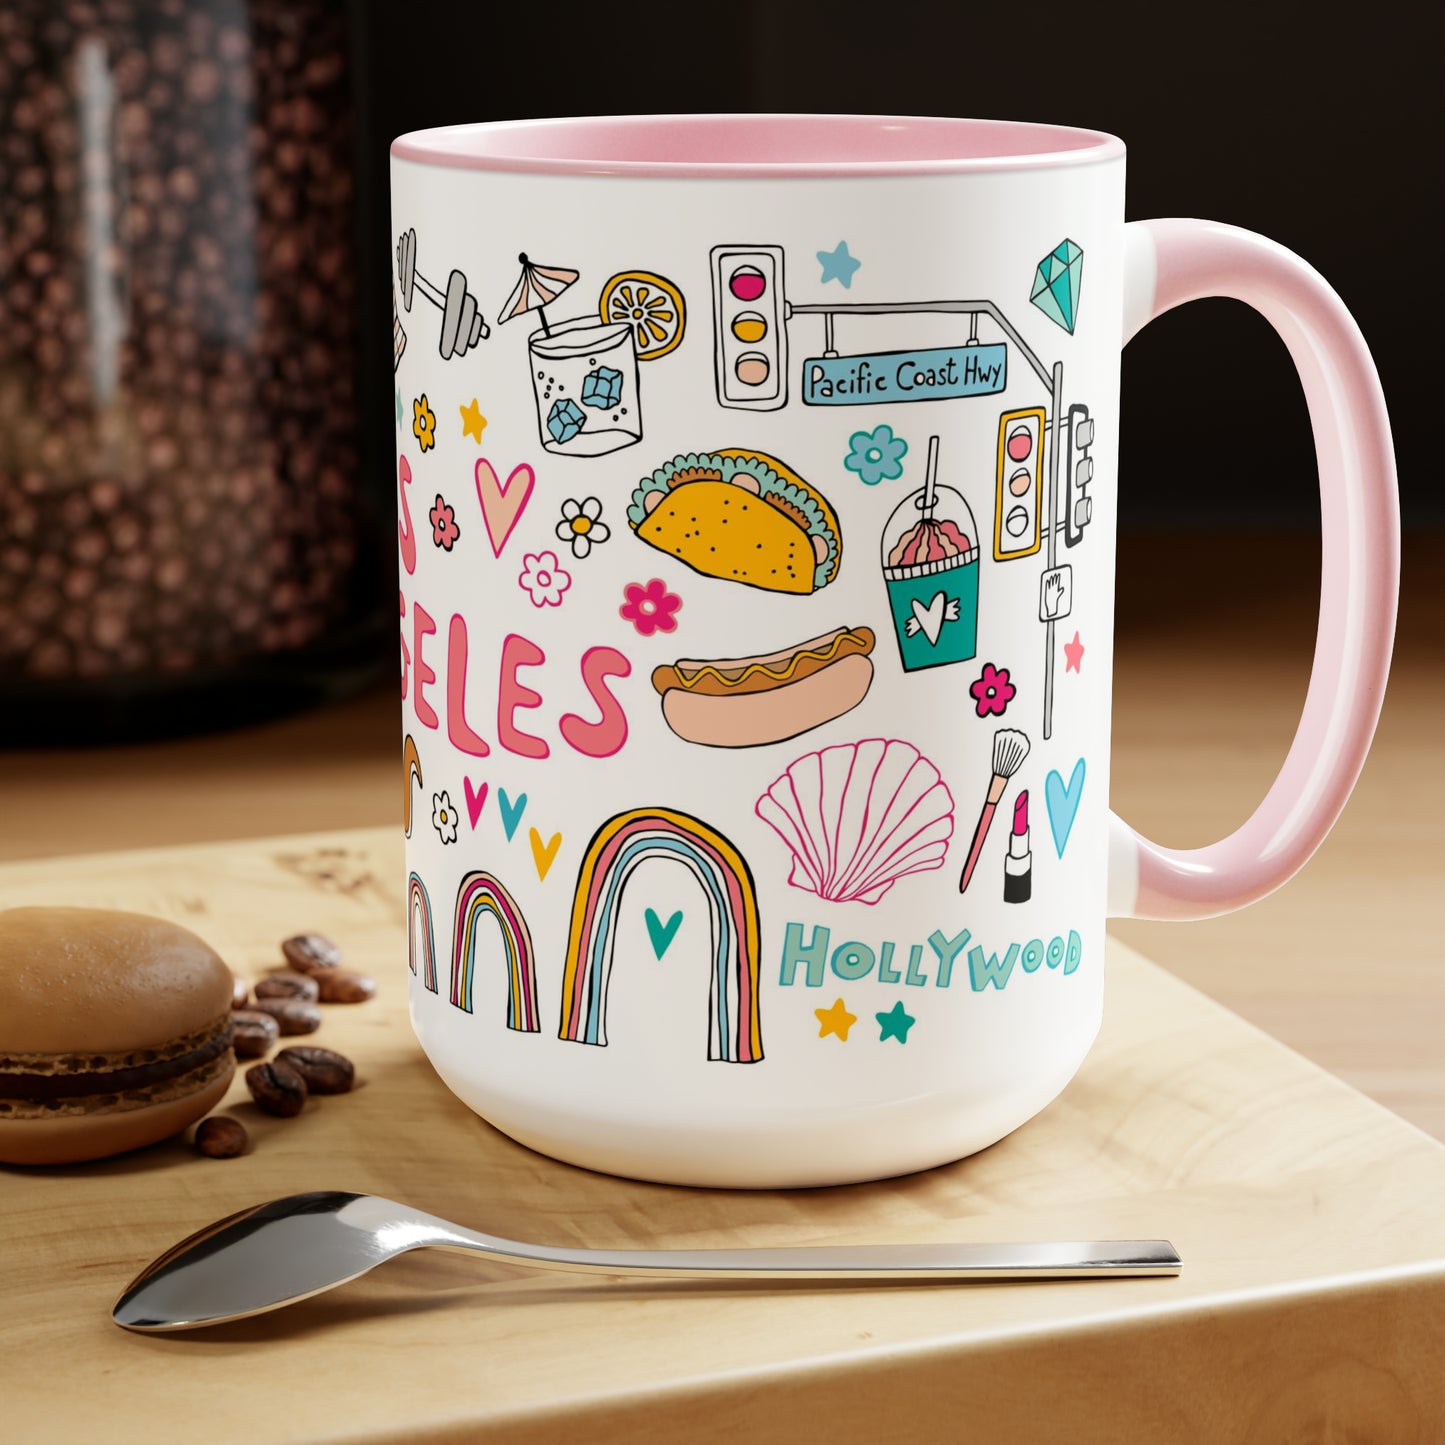 Los Angeles - *BIG* Coffee Mug (15oz, pink)